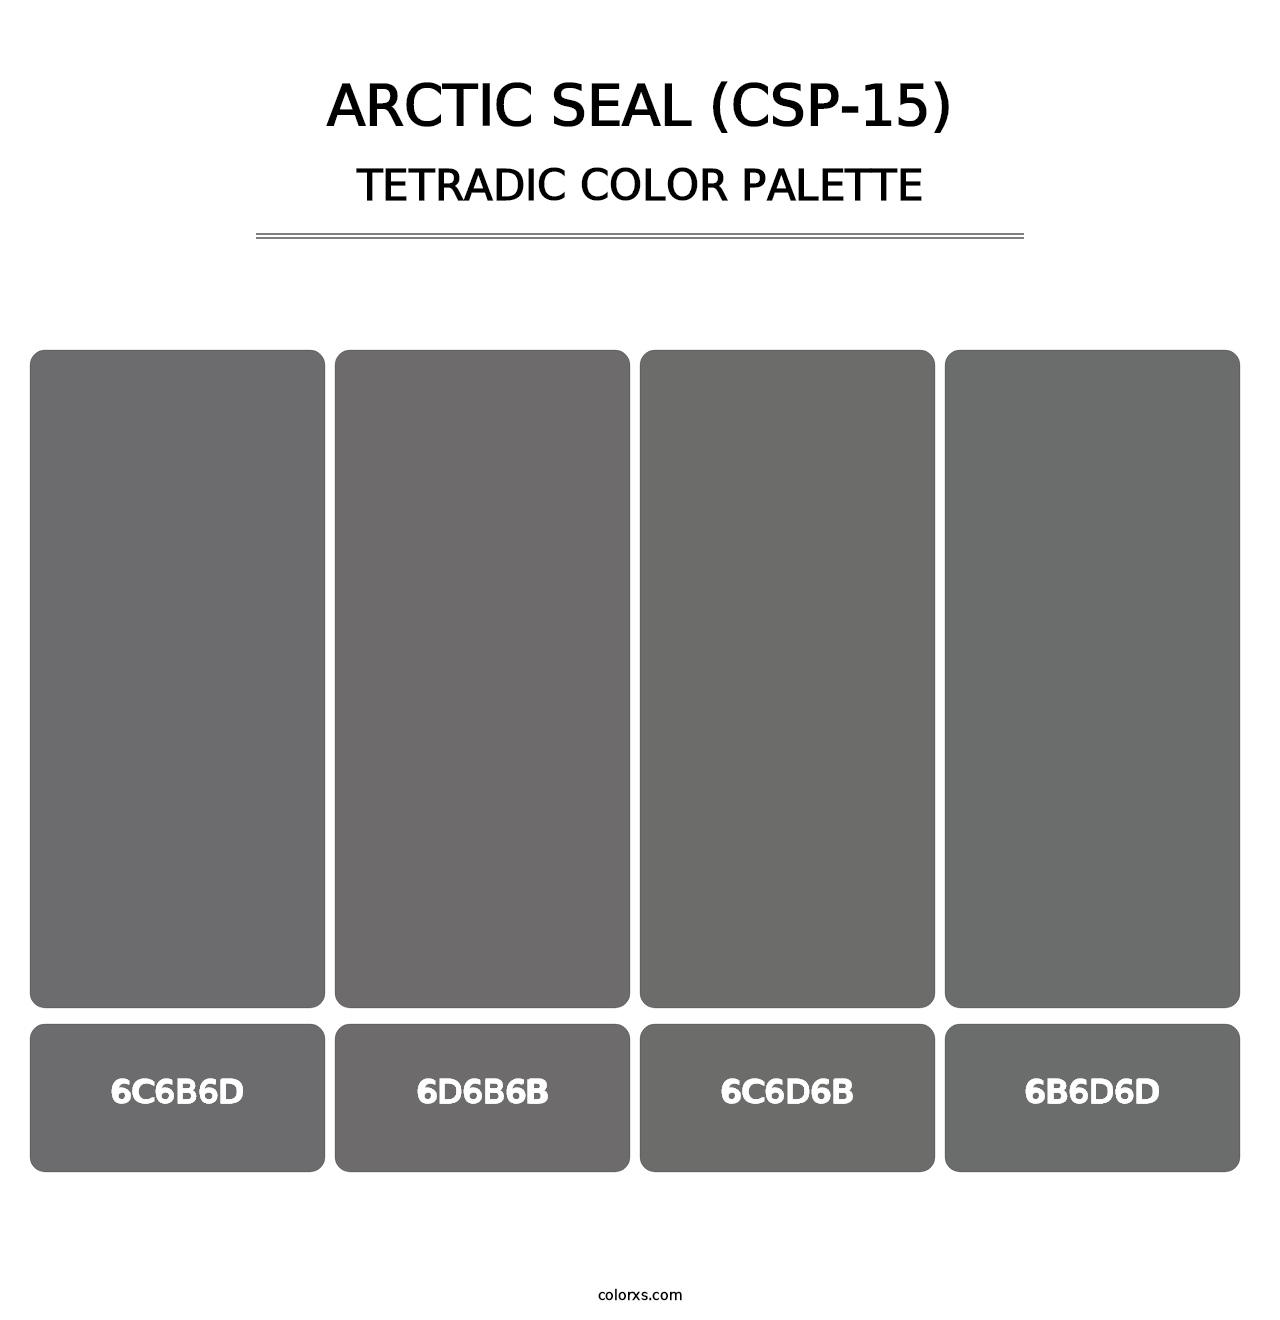 Arctic Seal (CSP-15) - Tetradic Color Palette